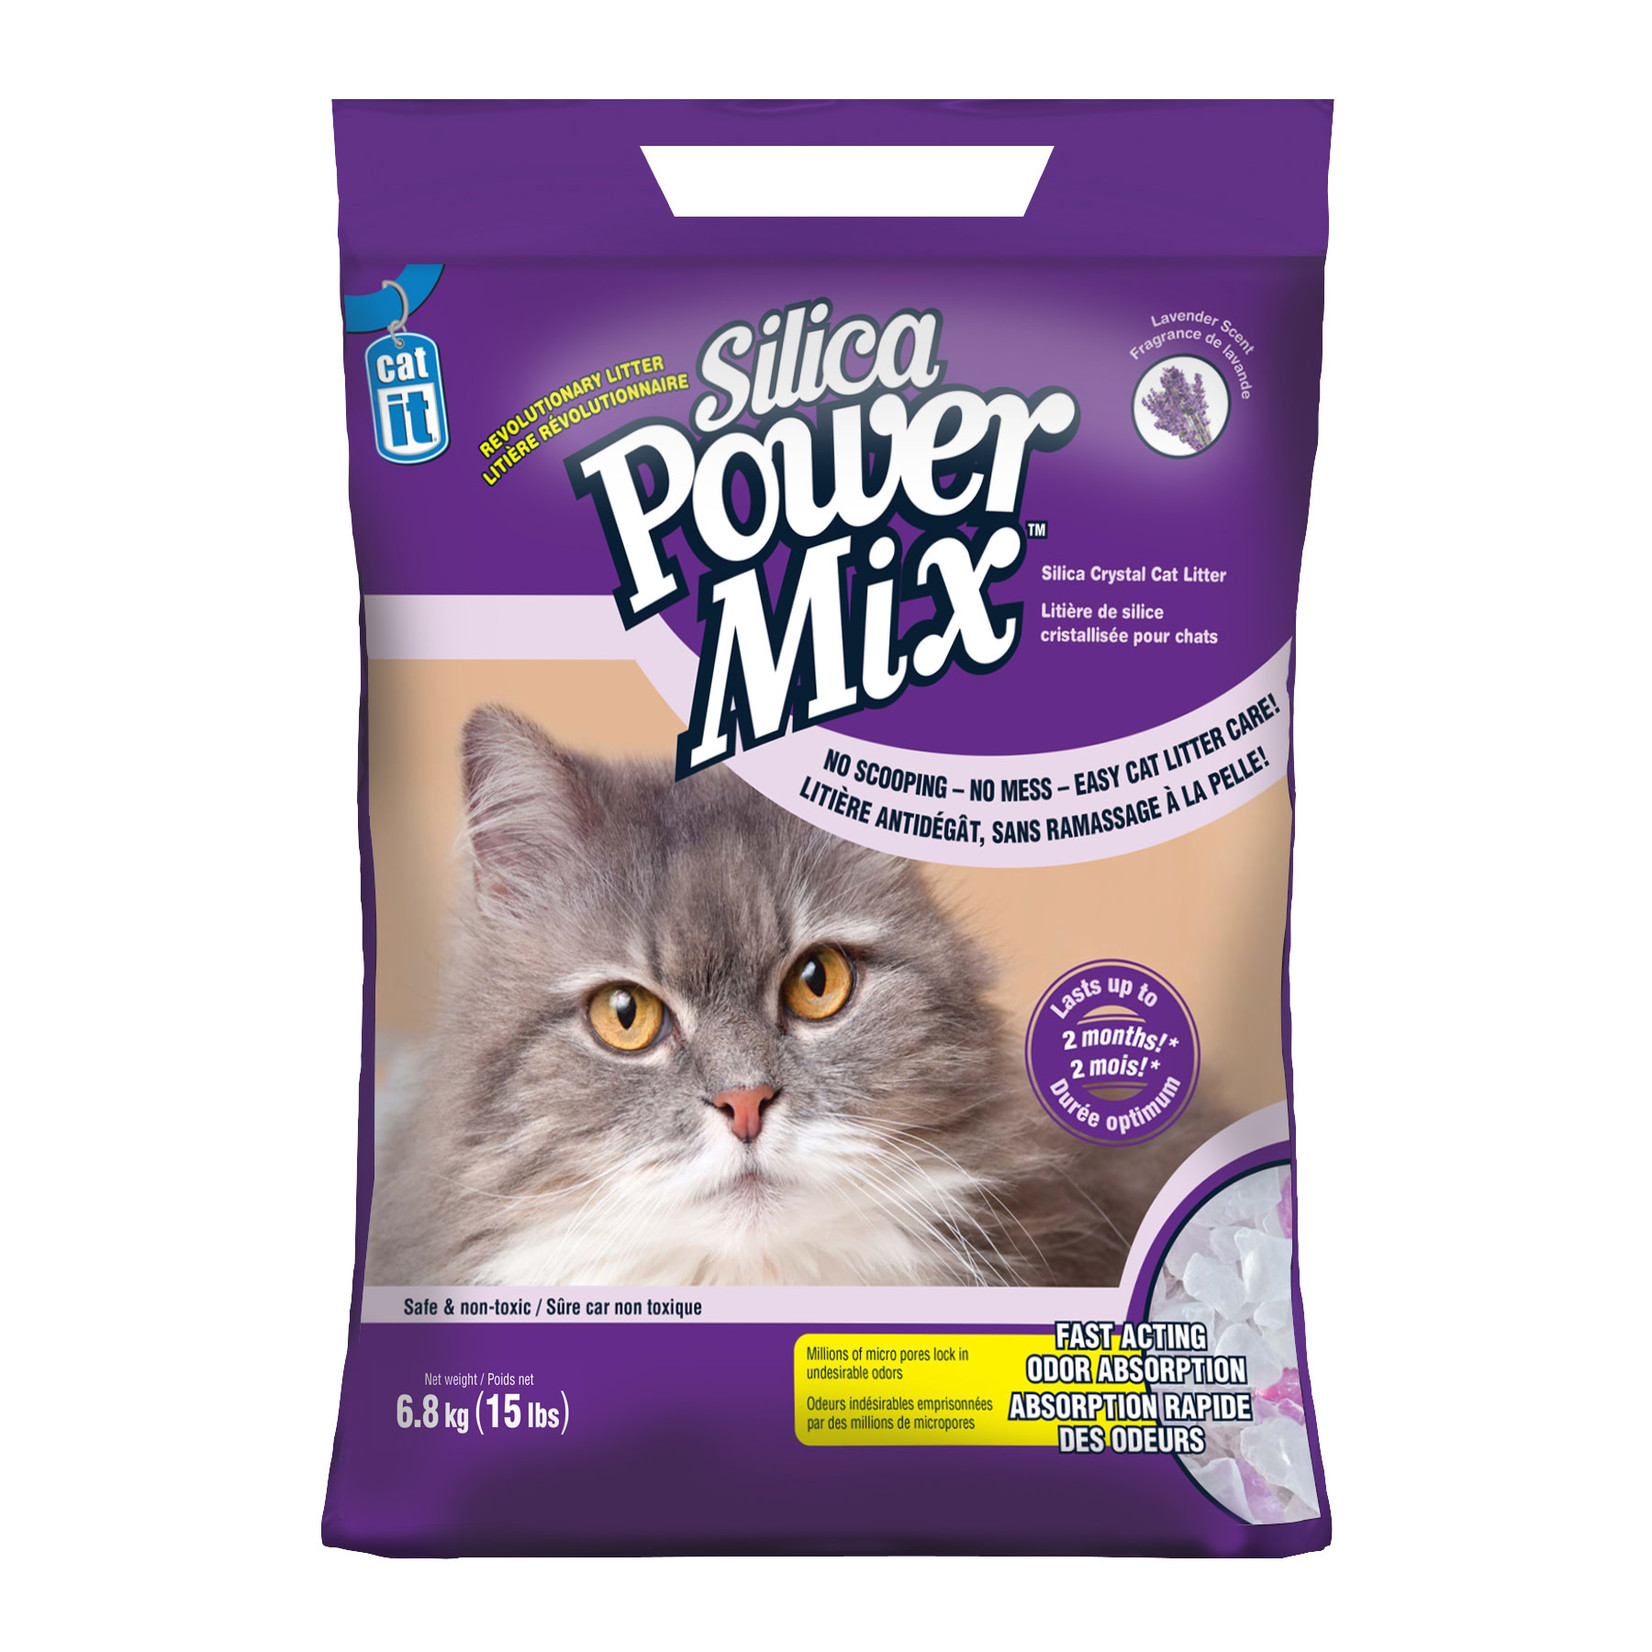 CAT IT (W) Catit Silica Power Mix Lavender scent - 6.8 kg (15 lbs) bag